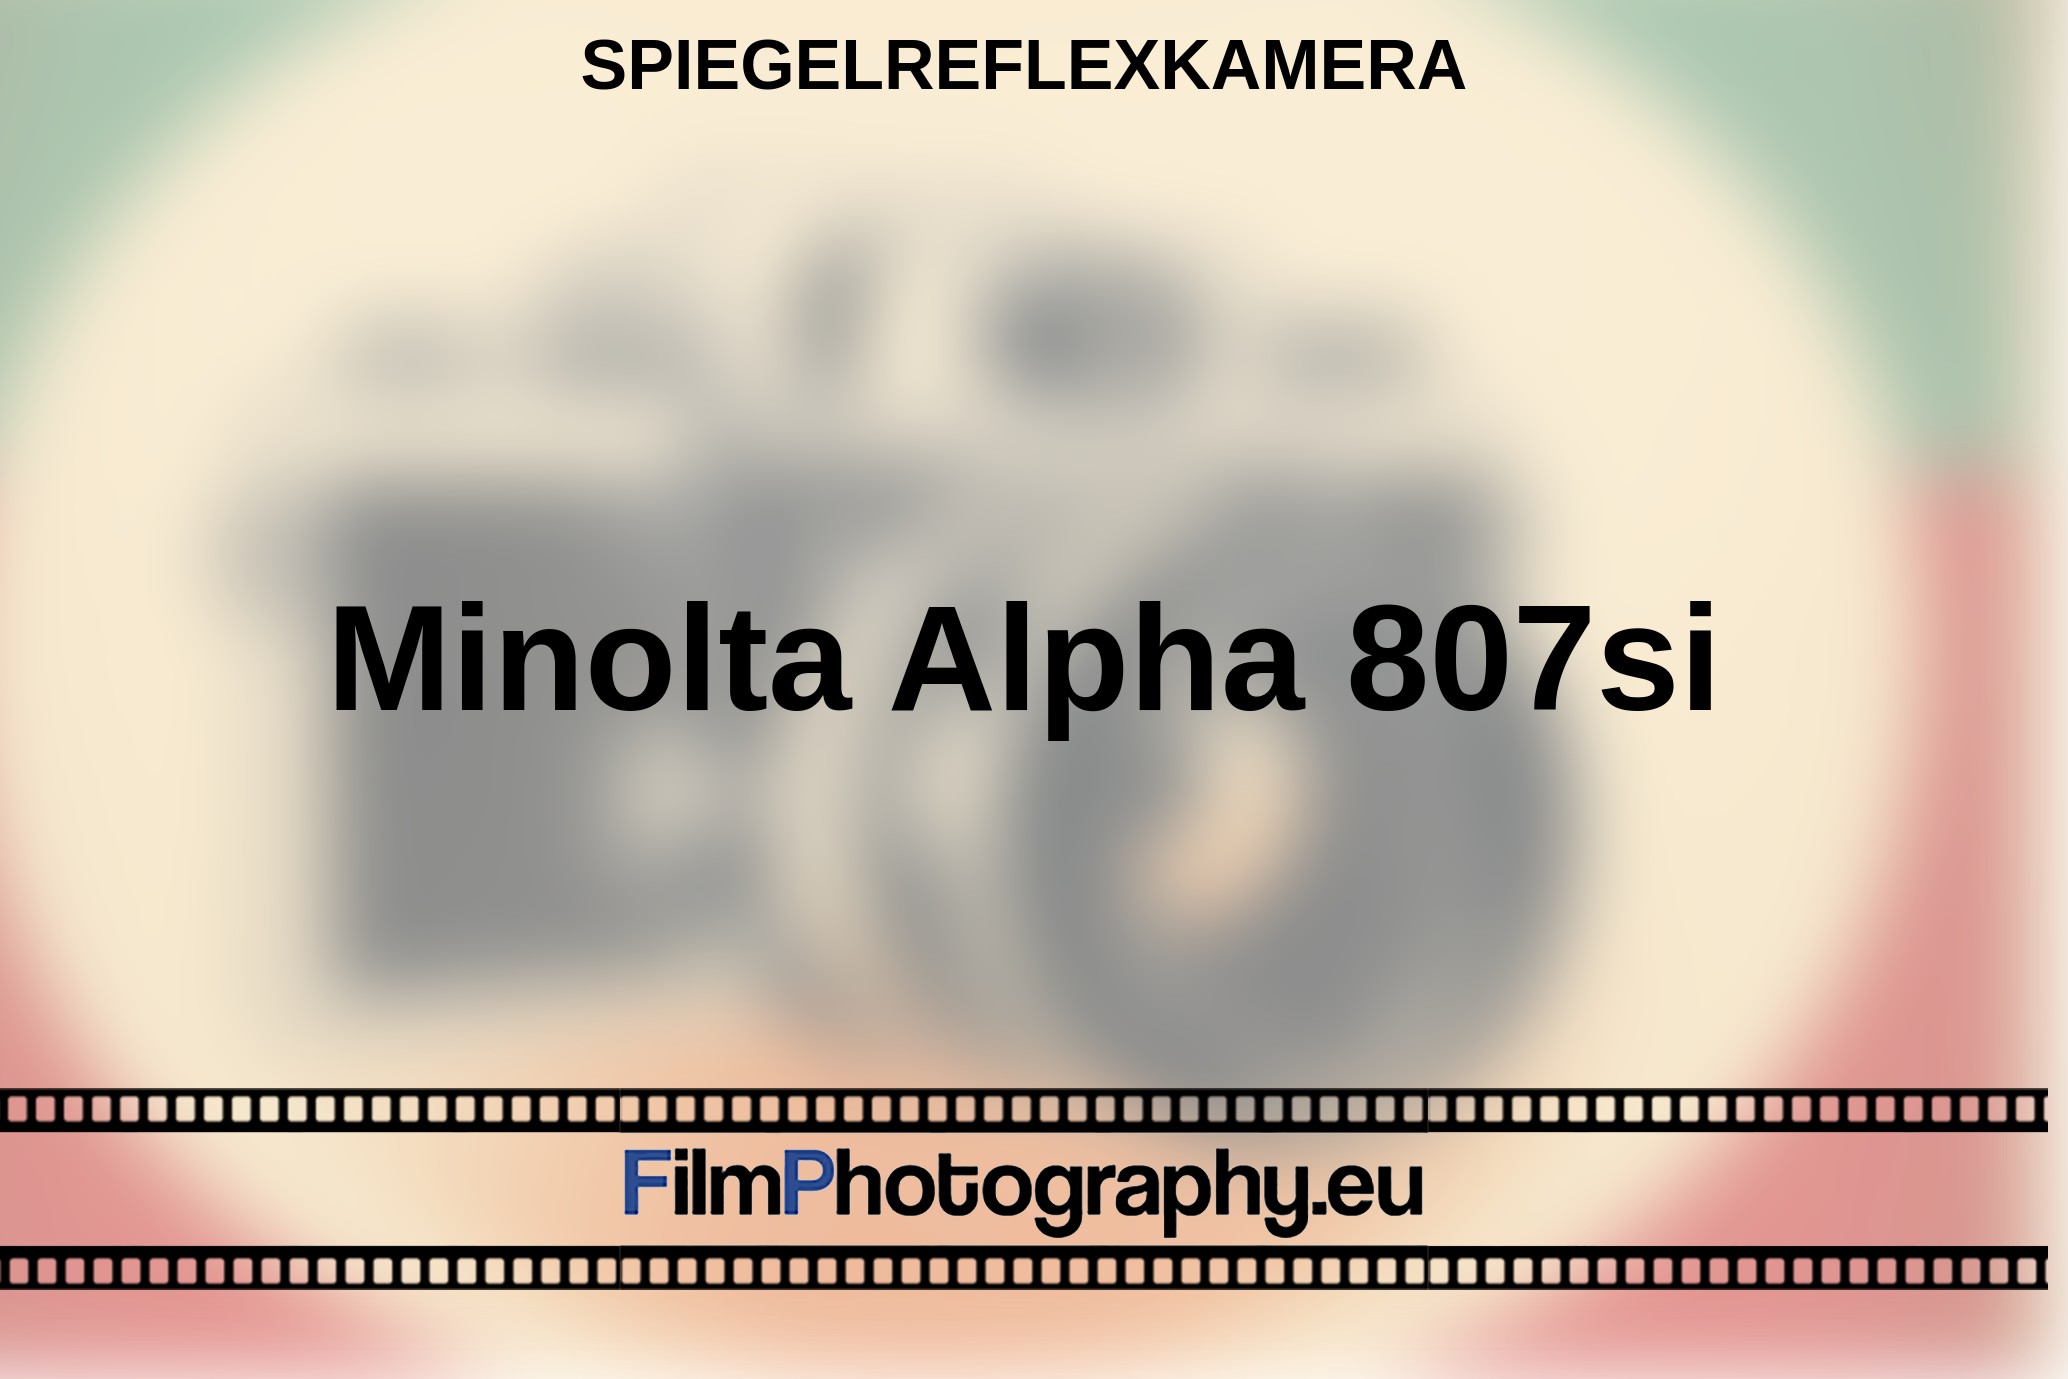 Minolta-Alpha-807si-Spiegelreflexkamera-bnv.jpg